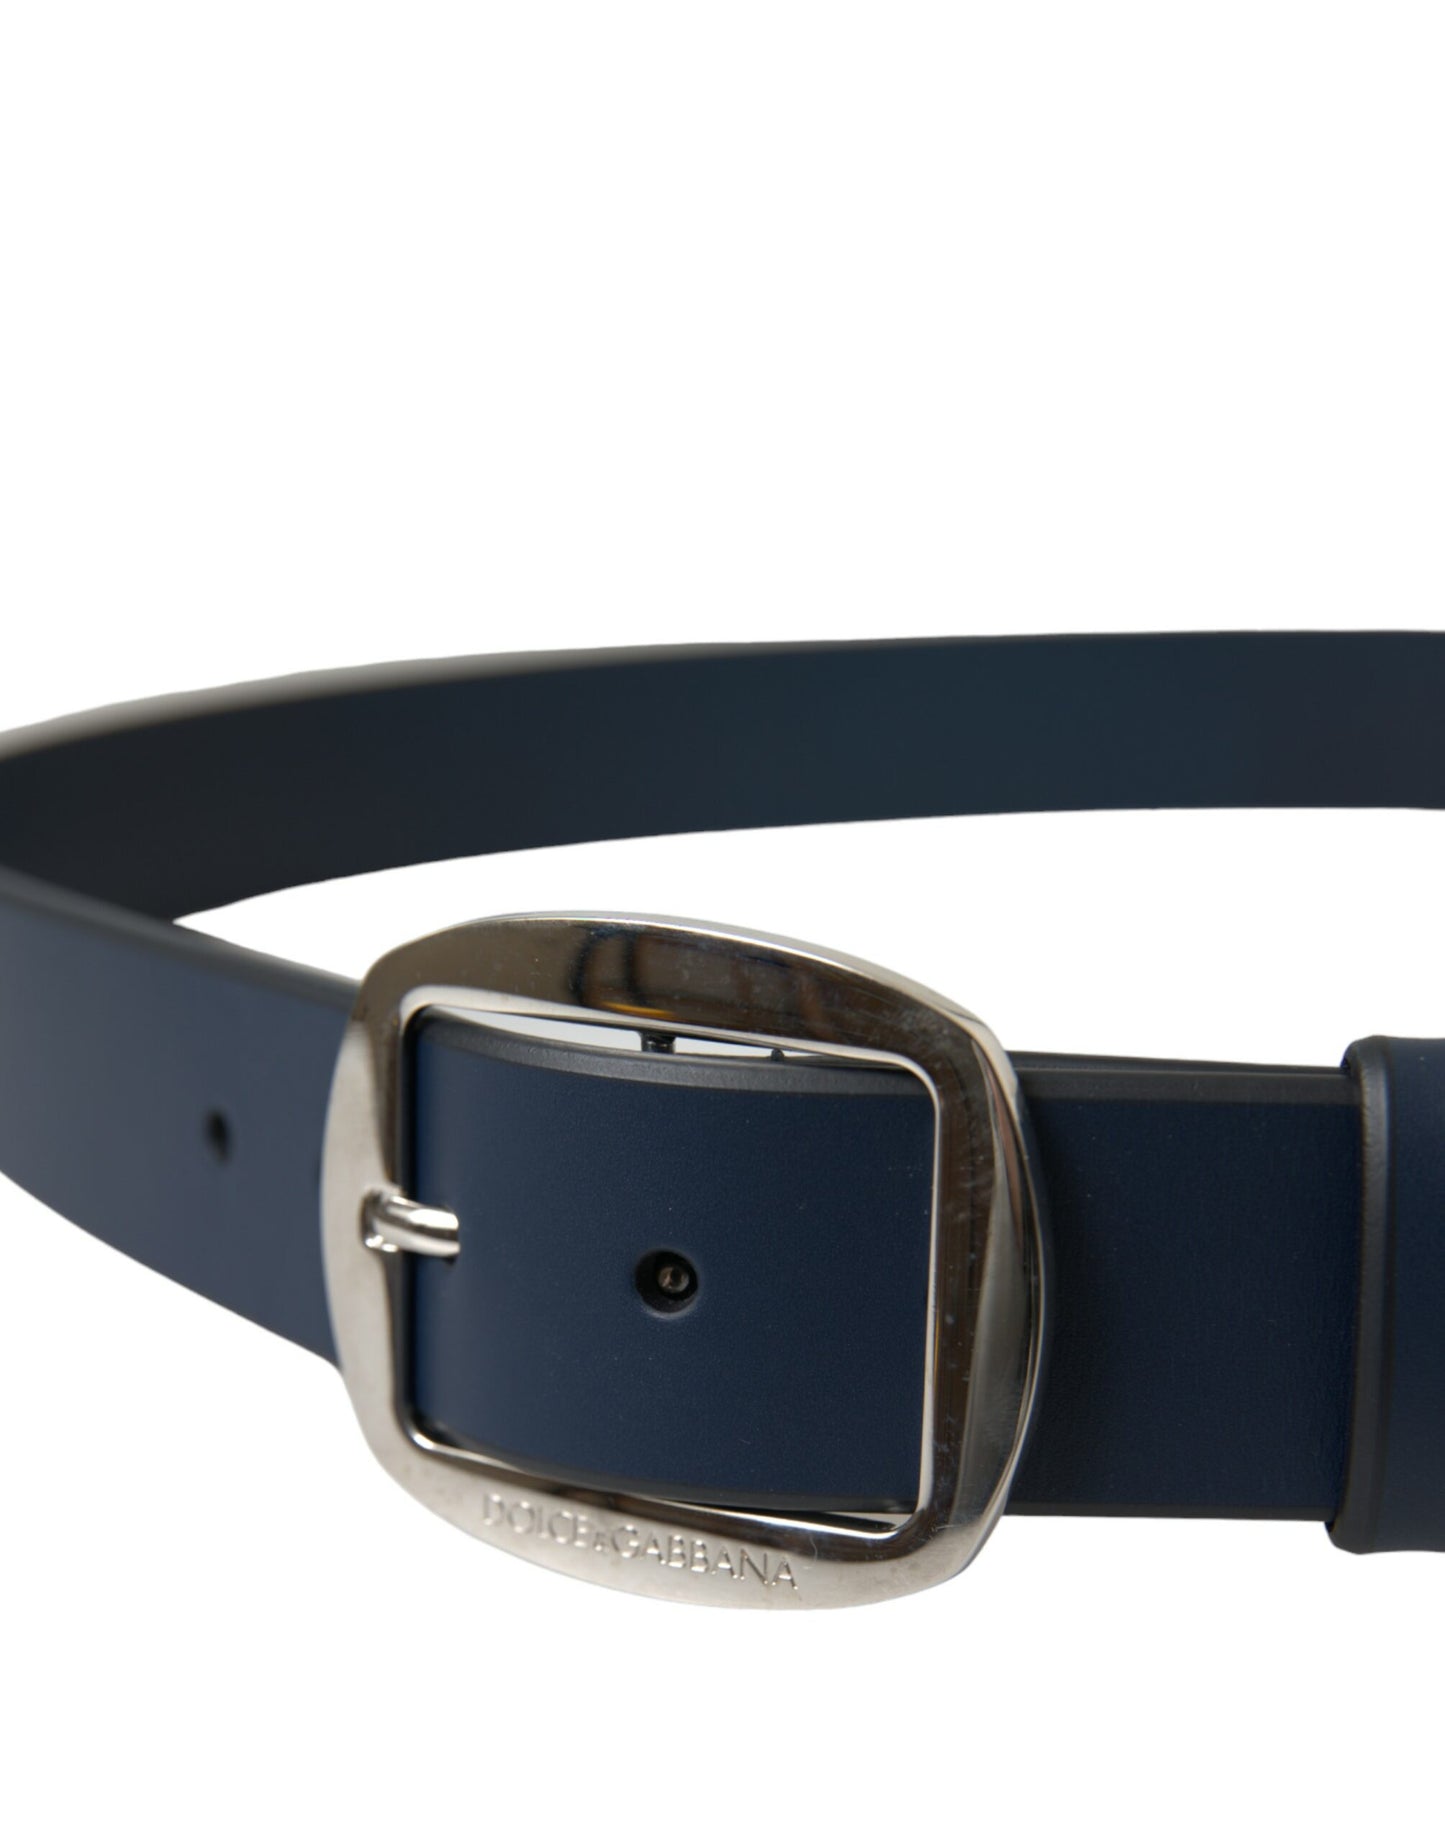 Elegant Blue Calf Leather Belt with Metal Buckle